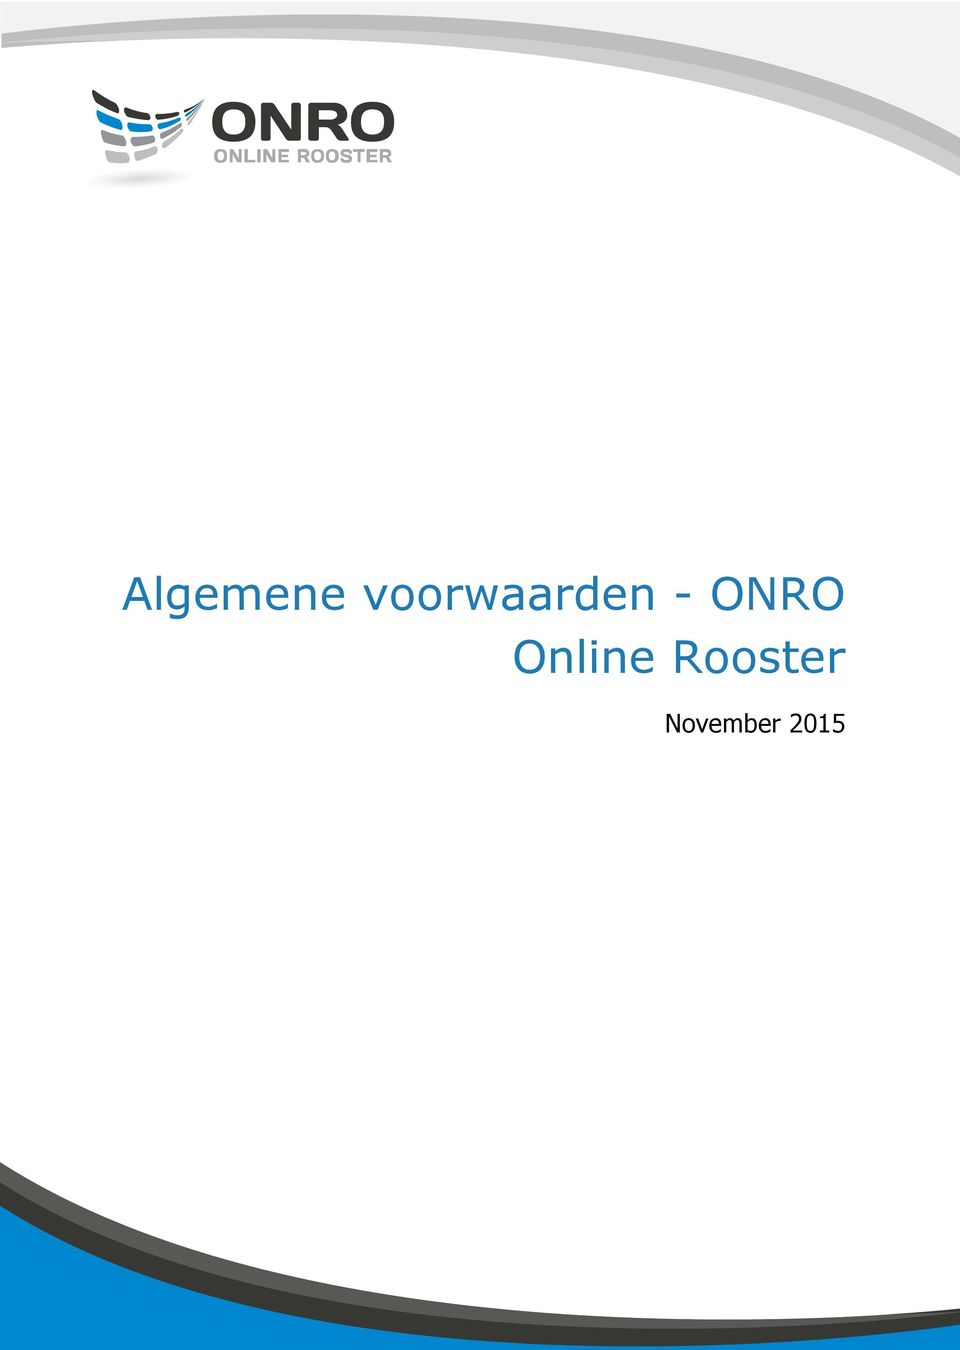 ONRO Online